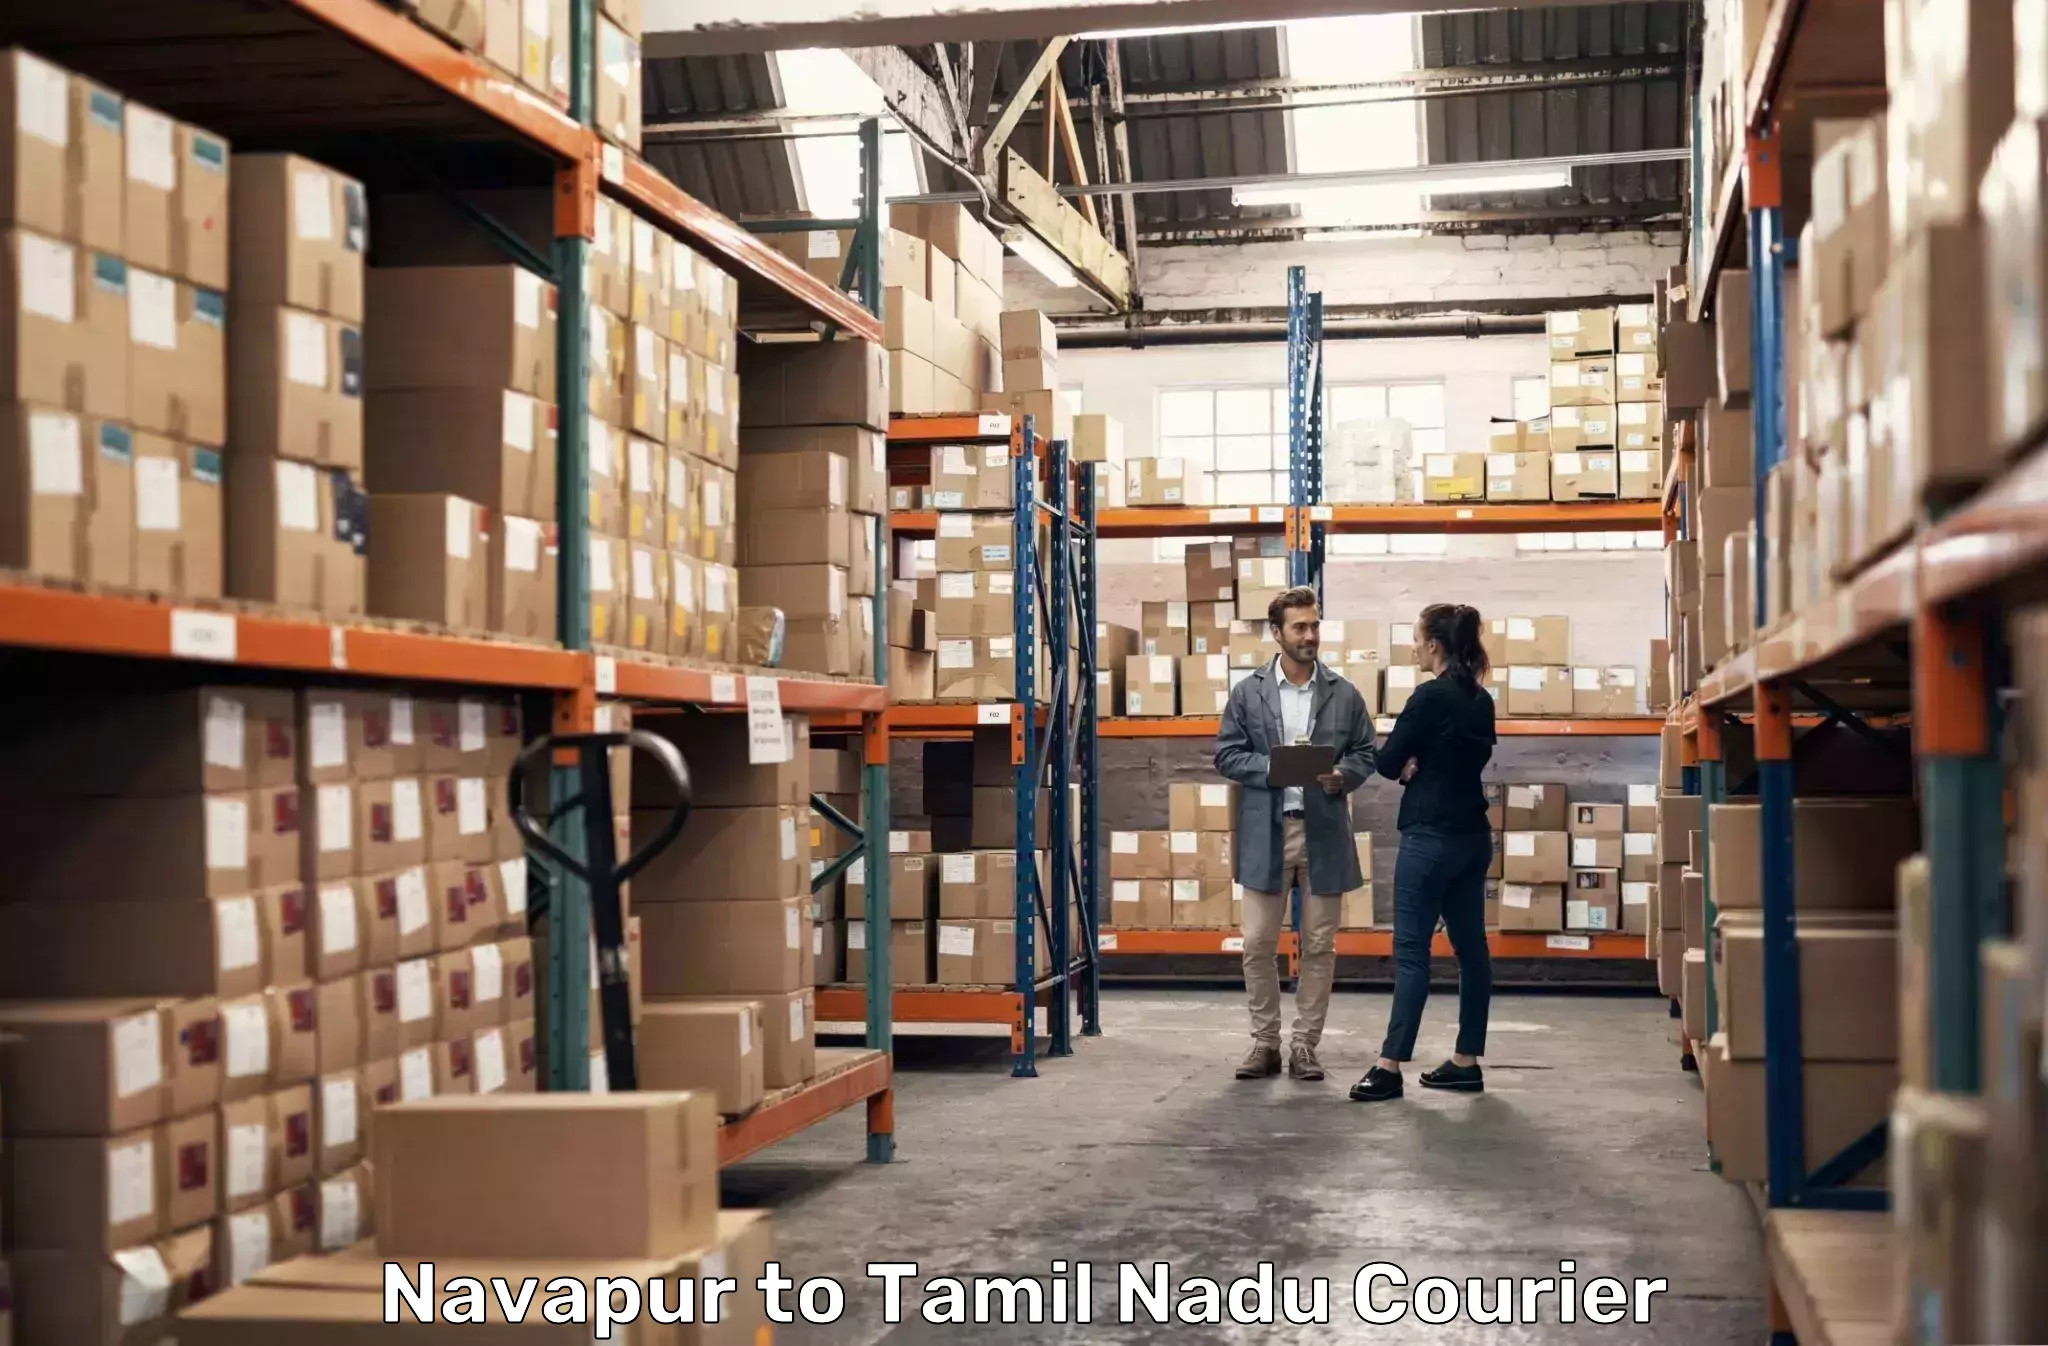 Courier service efficiency Navapur to Ayyampettai